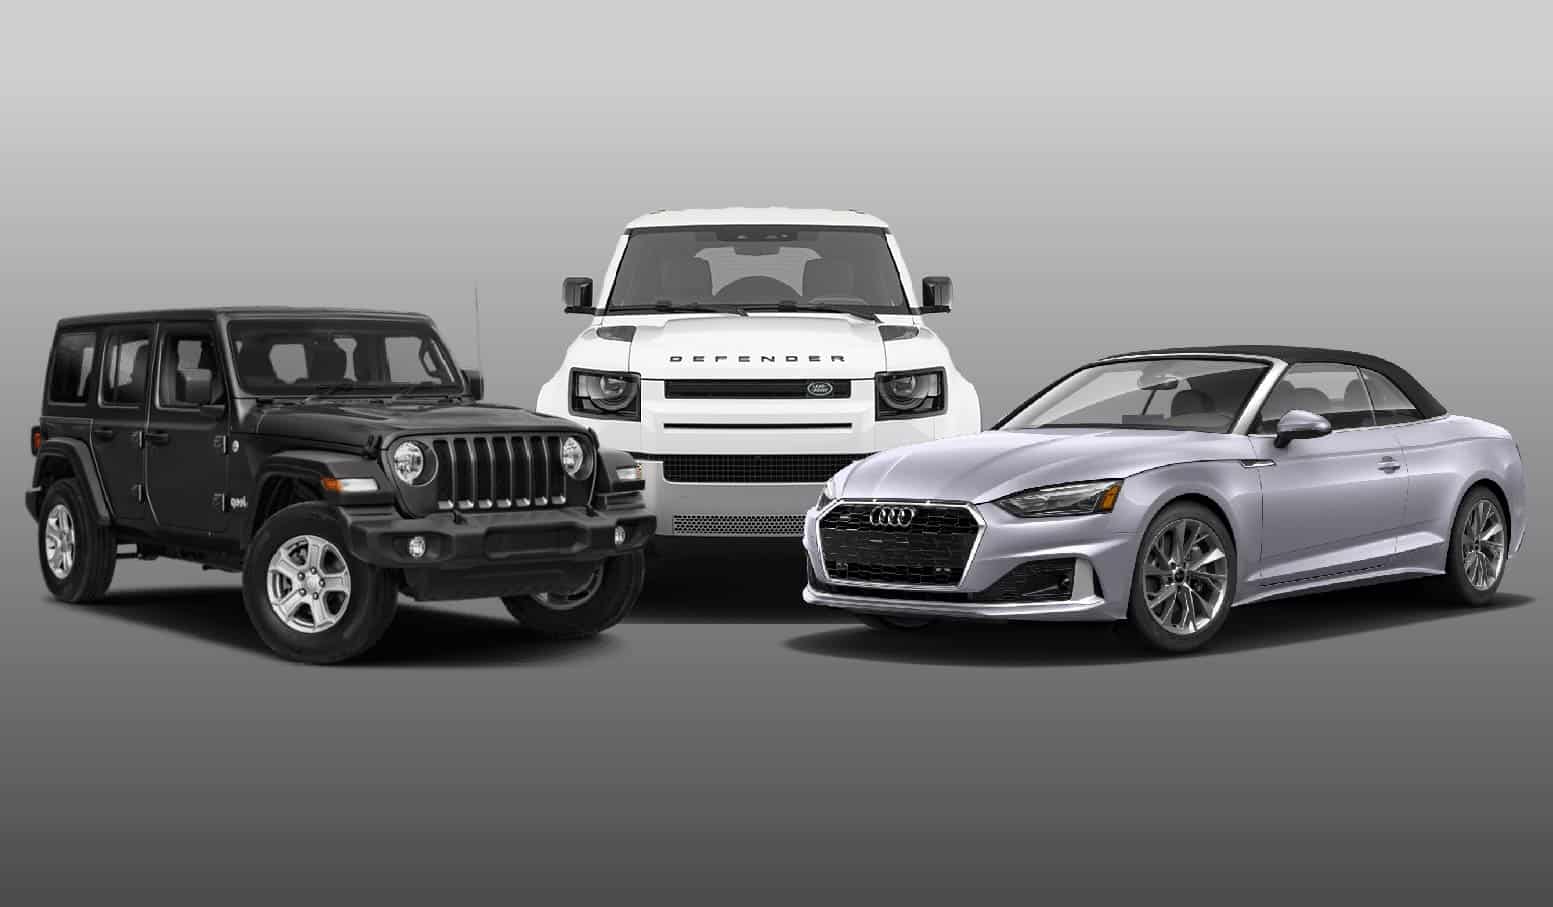 9 Coolest Convertible SUVs in 2022|Jeep Wrangler|Volkswagen T-Roc Cabriolet|Audi Cross Cabriolet Quattro|Land Rover Defender Convertible|Range Rover Evoque|Mercedes Maybach G650 Landaulet|Open Top Hummer H1|Hummer EV SUV|Hyundai Santa Fe Cabriolet